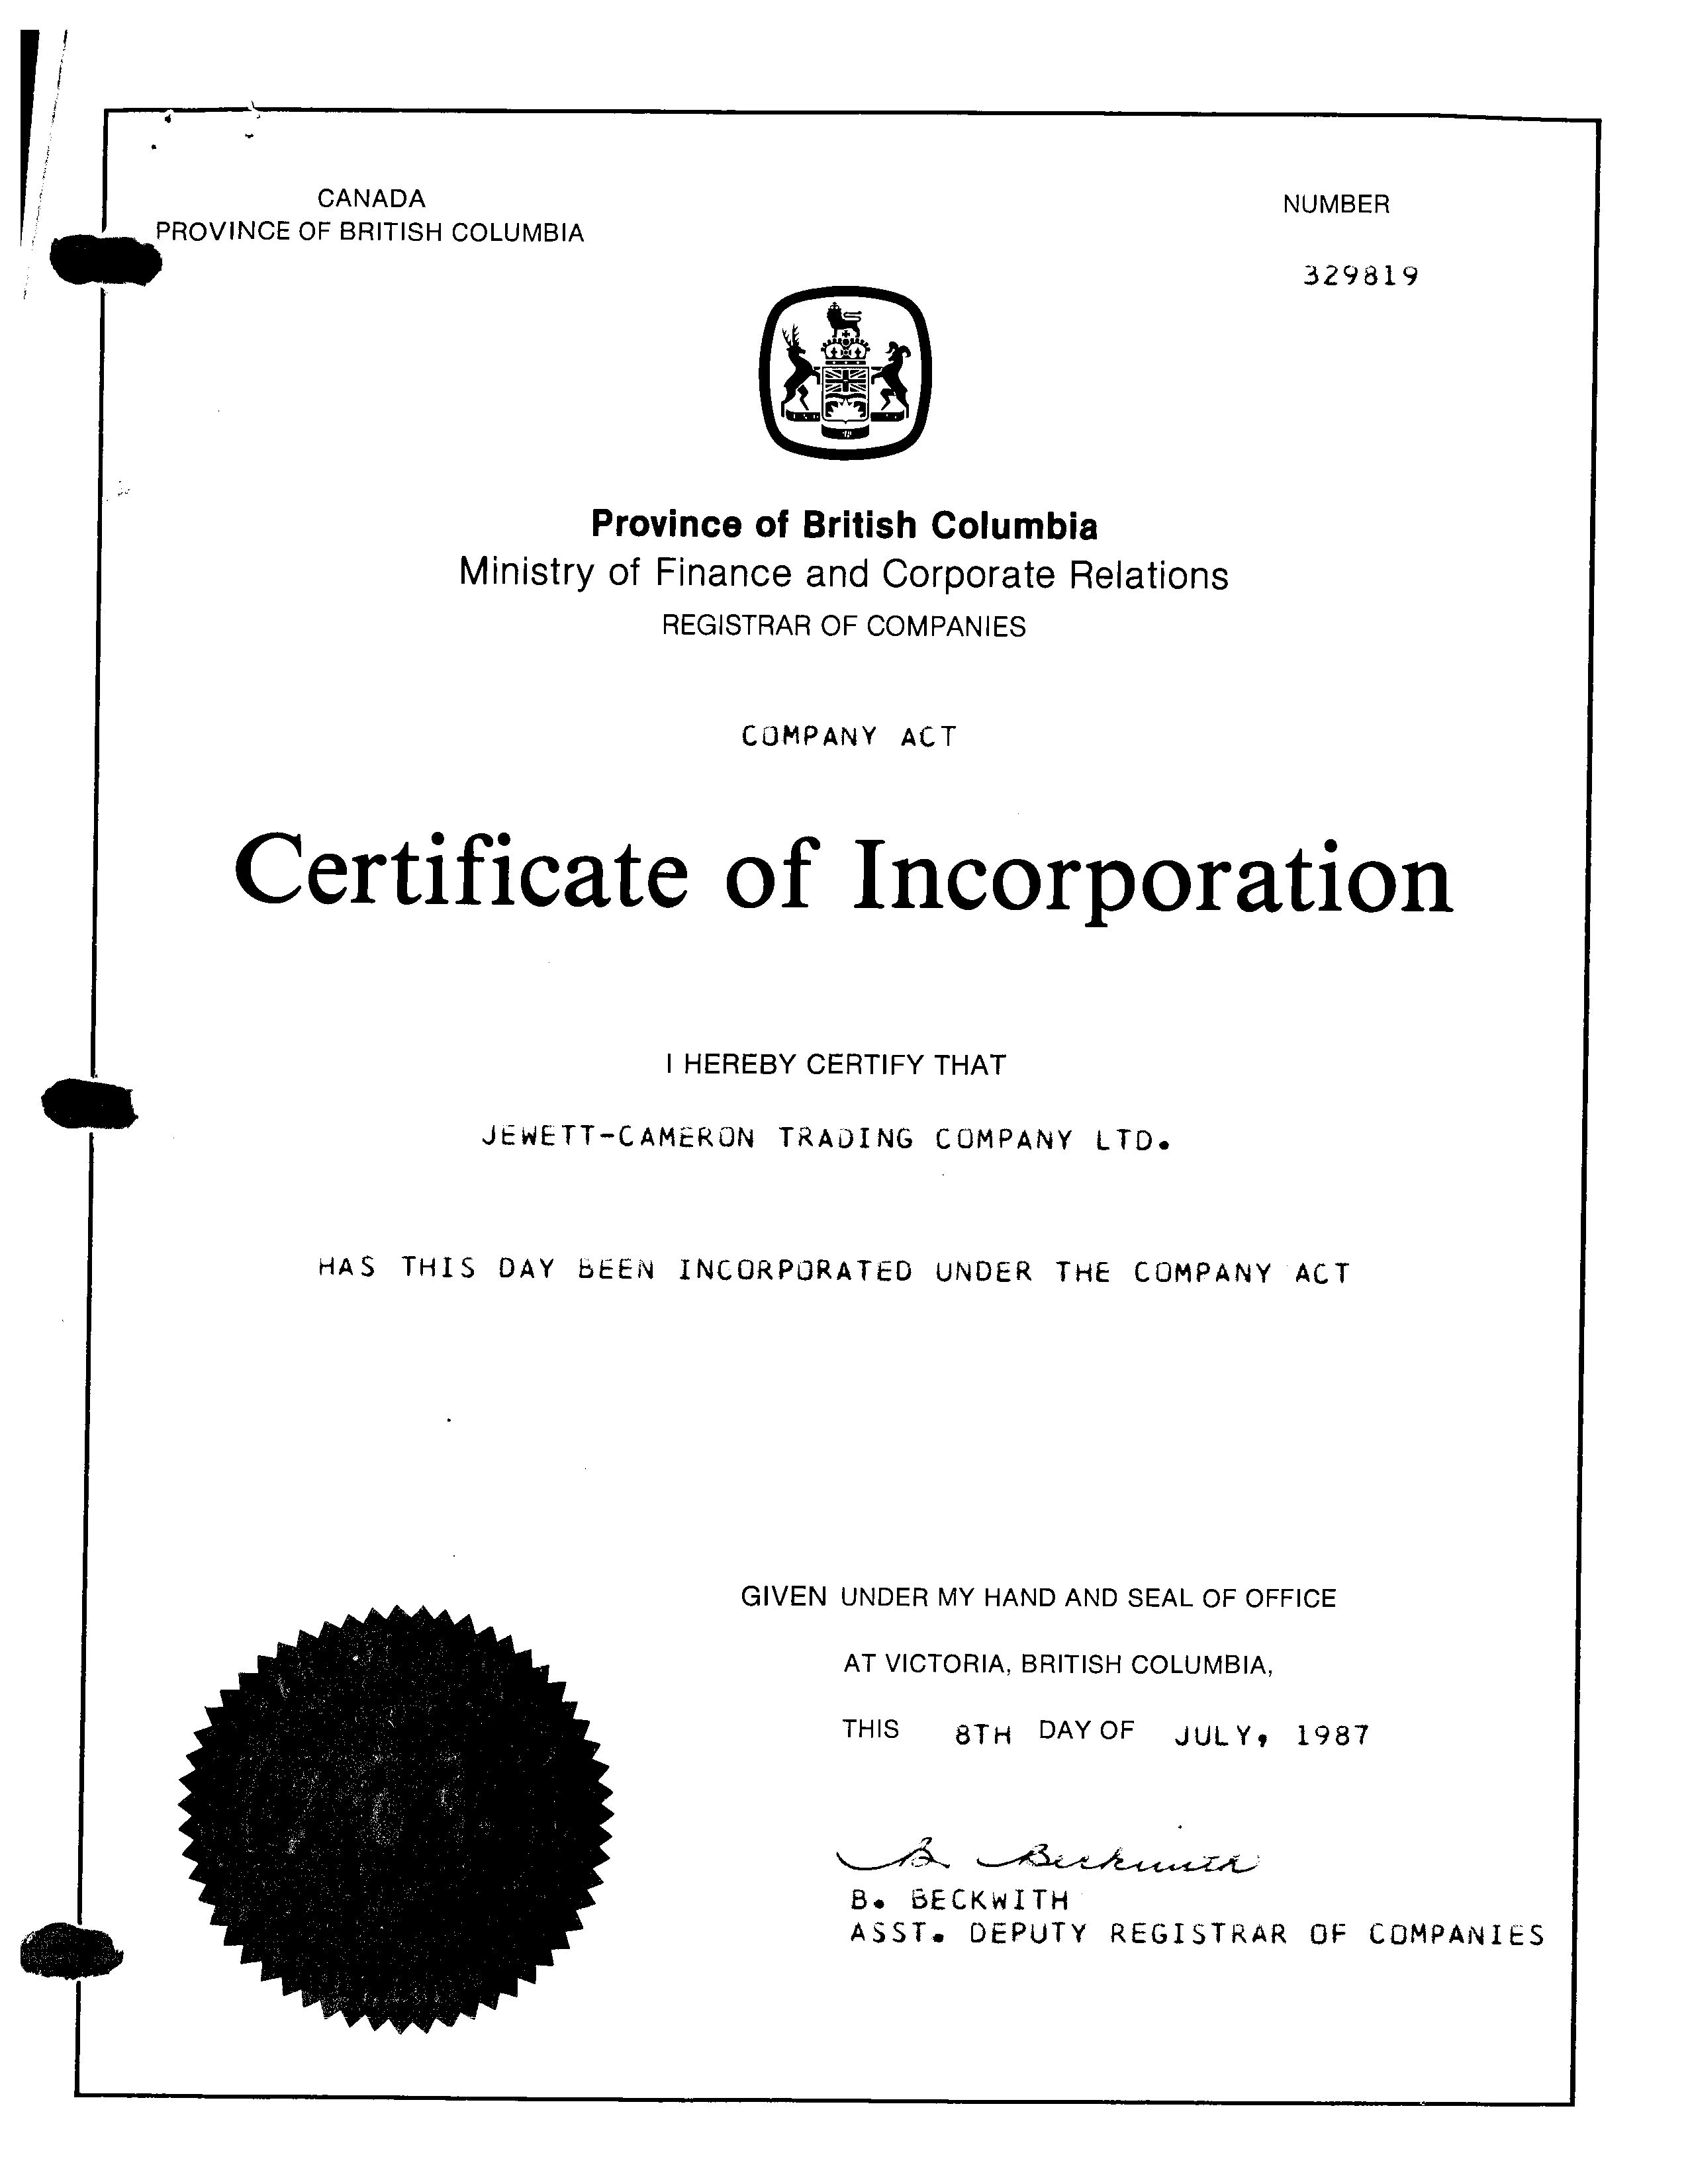 certificateofincorporatio001 jpg